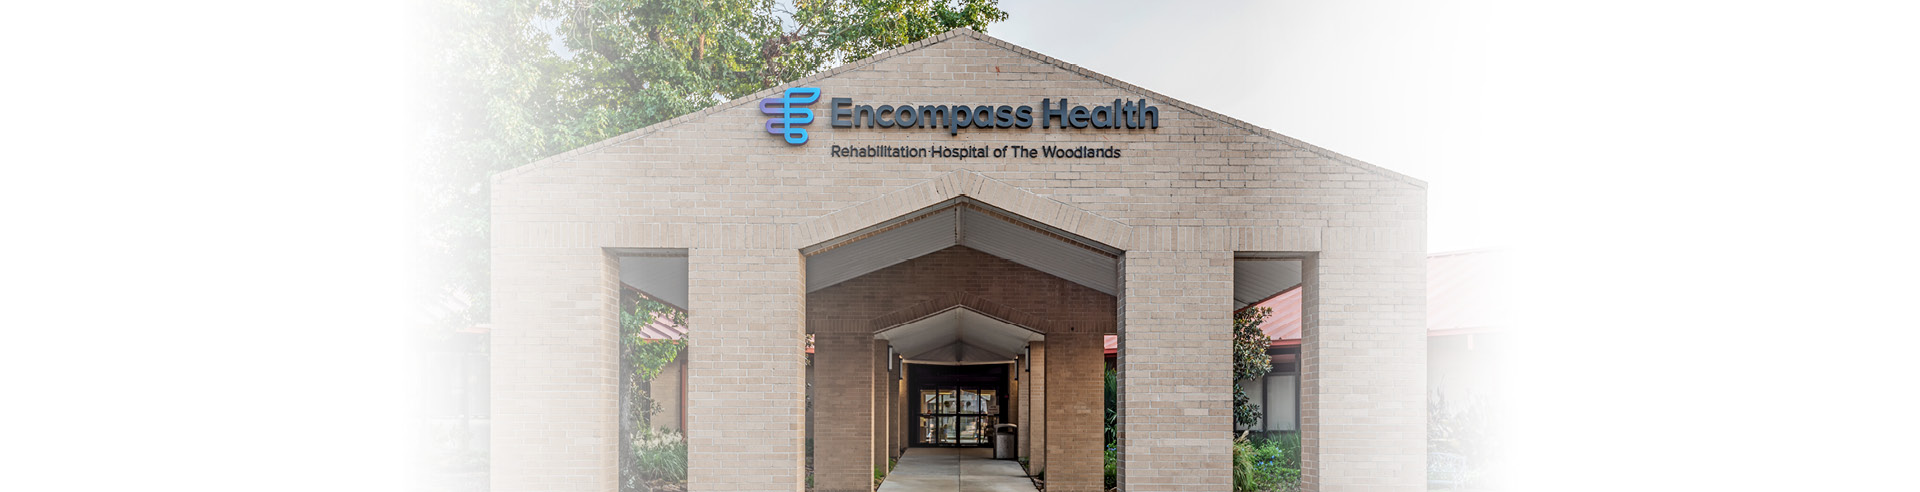 Encompass Health Rehabilitation Hospital The Woodlands exterior